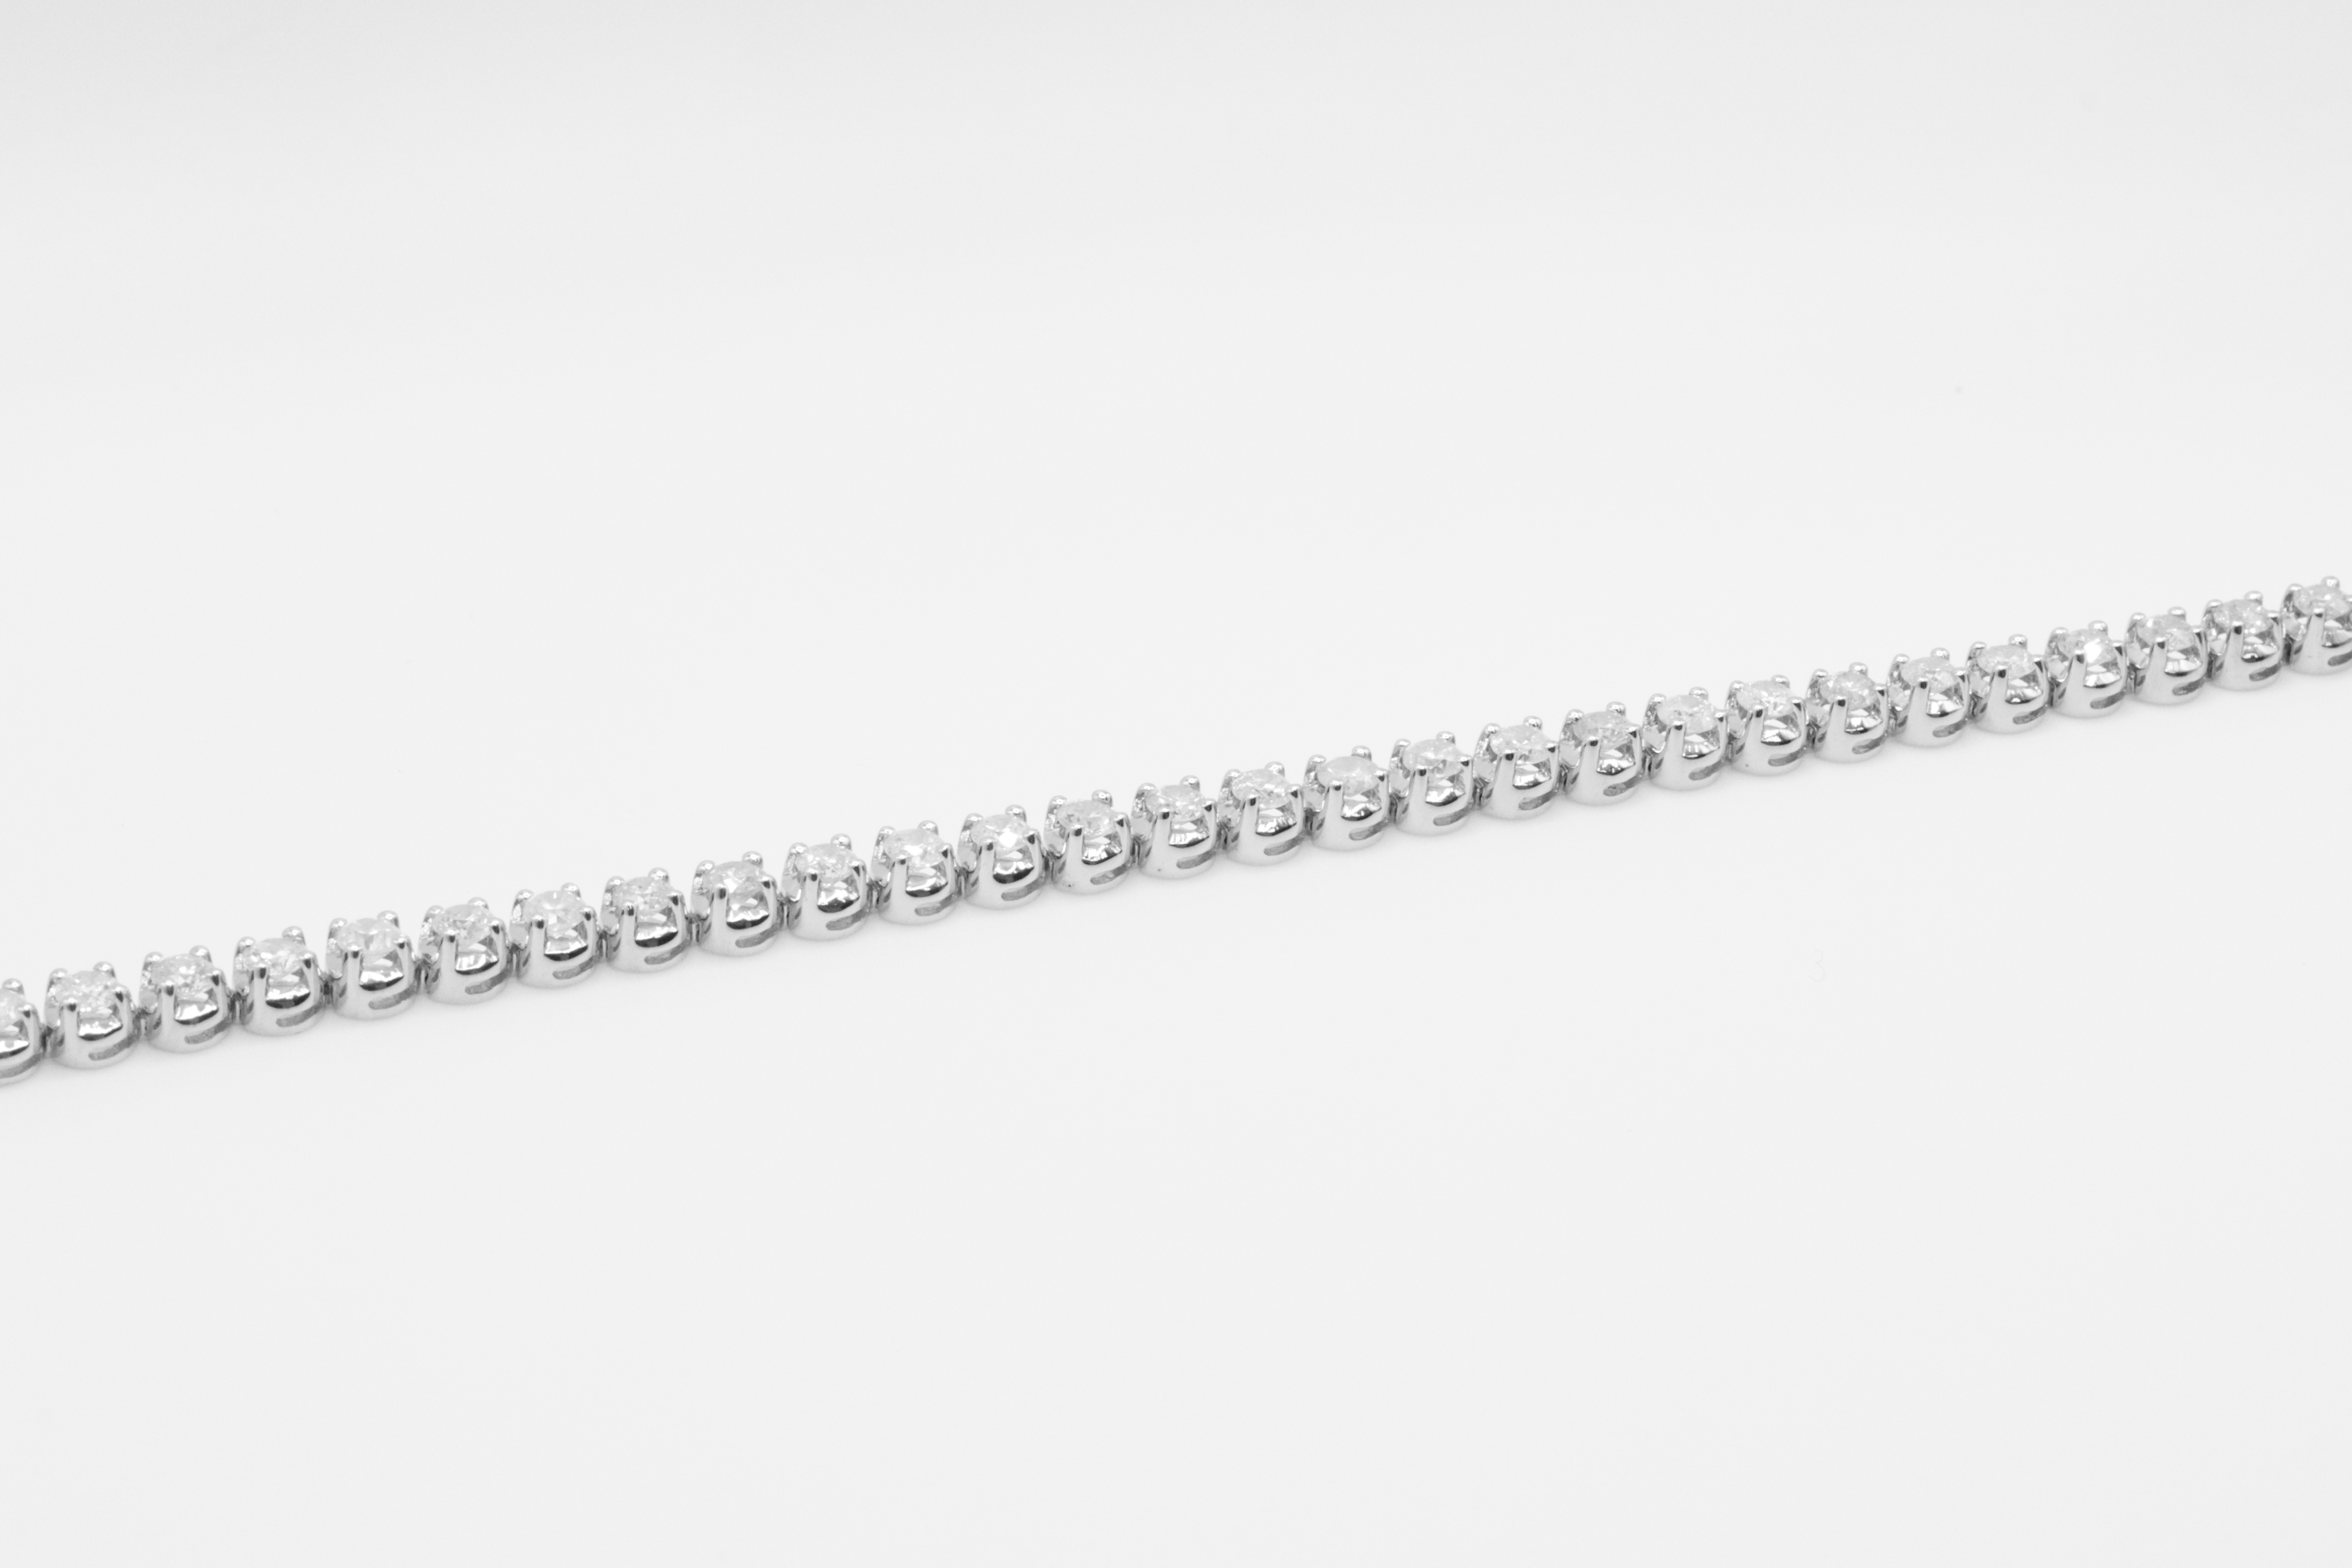 7.0 Carat 18ct White Gold Tennis Bracelet set with Round Brilliant Cut Natural Diamonds - Image 10 of 16